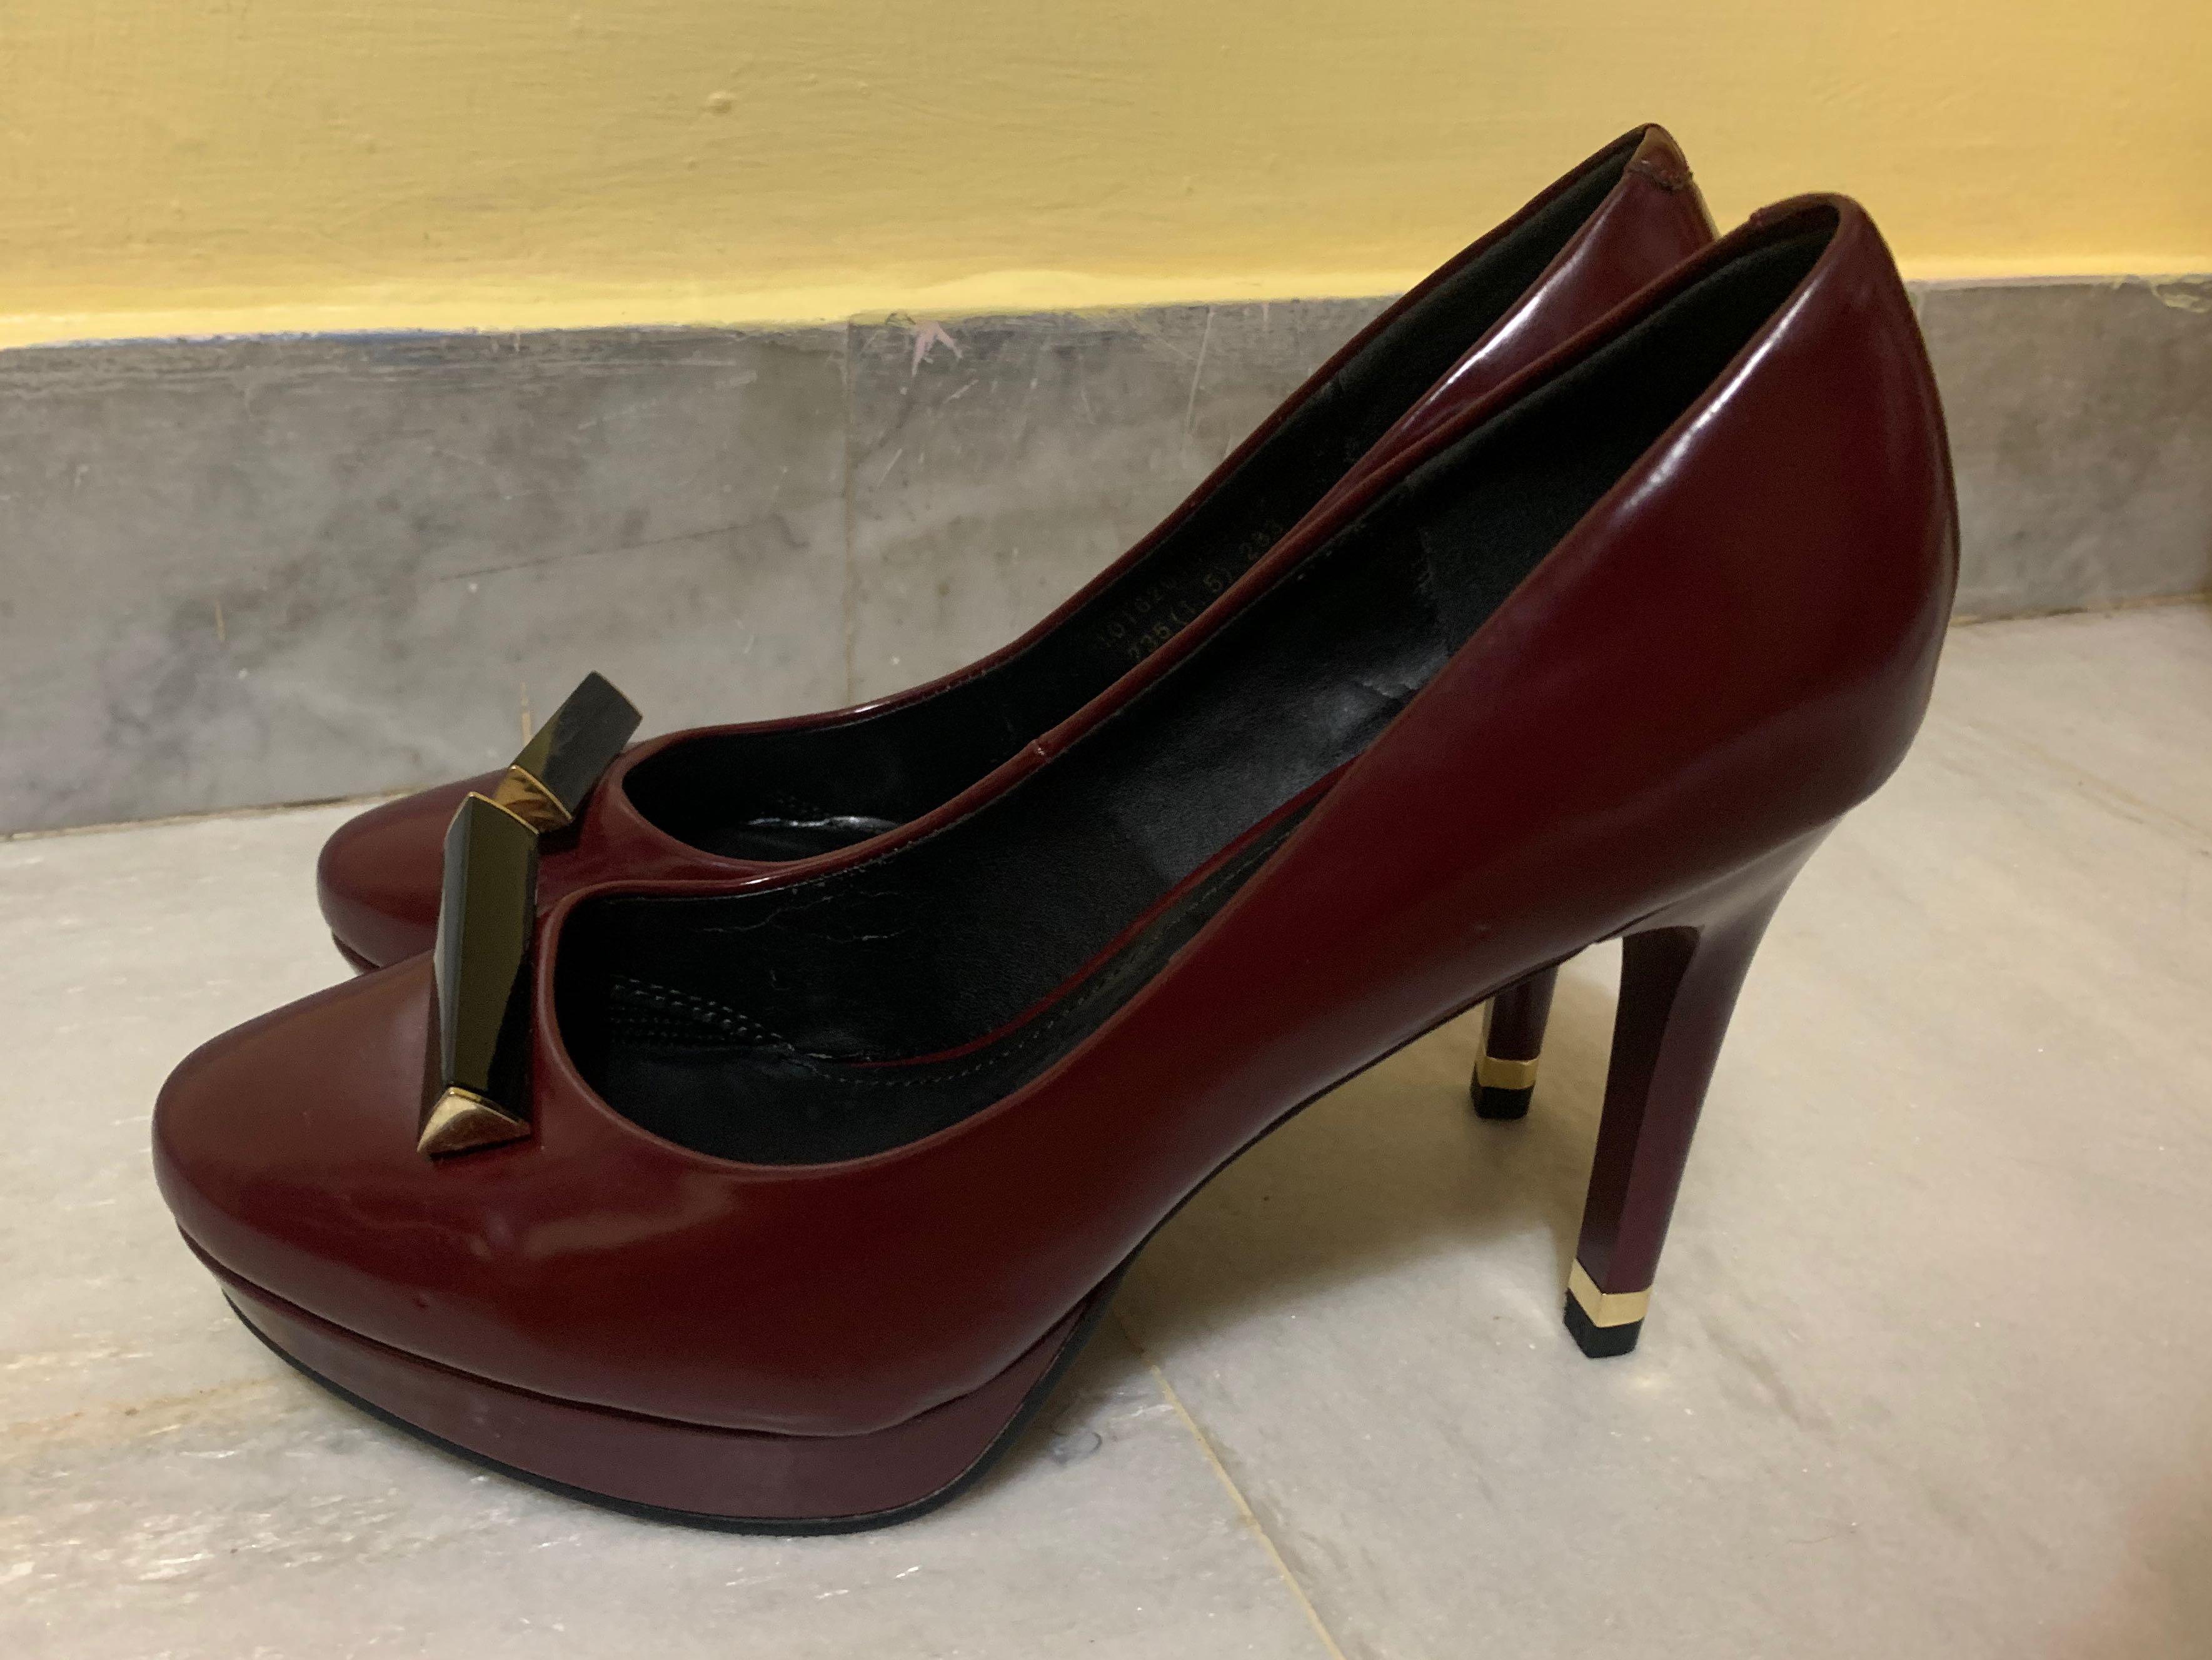 maroon colored heels